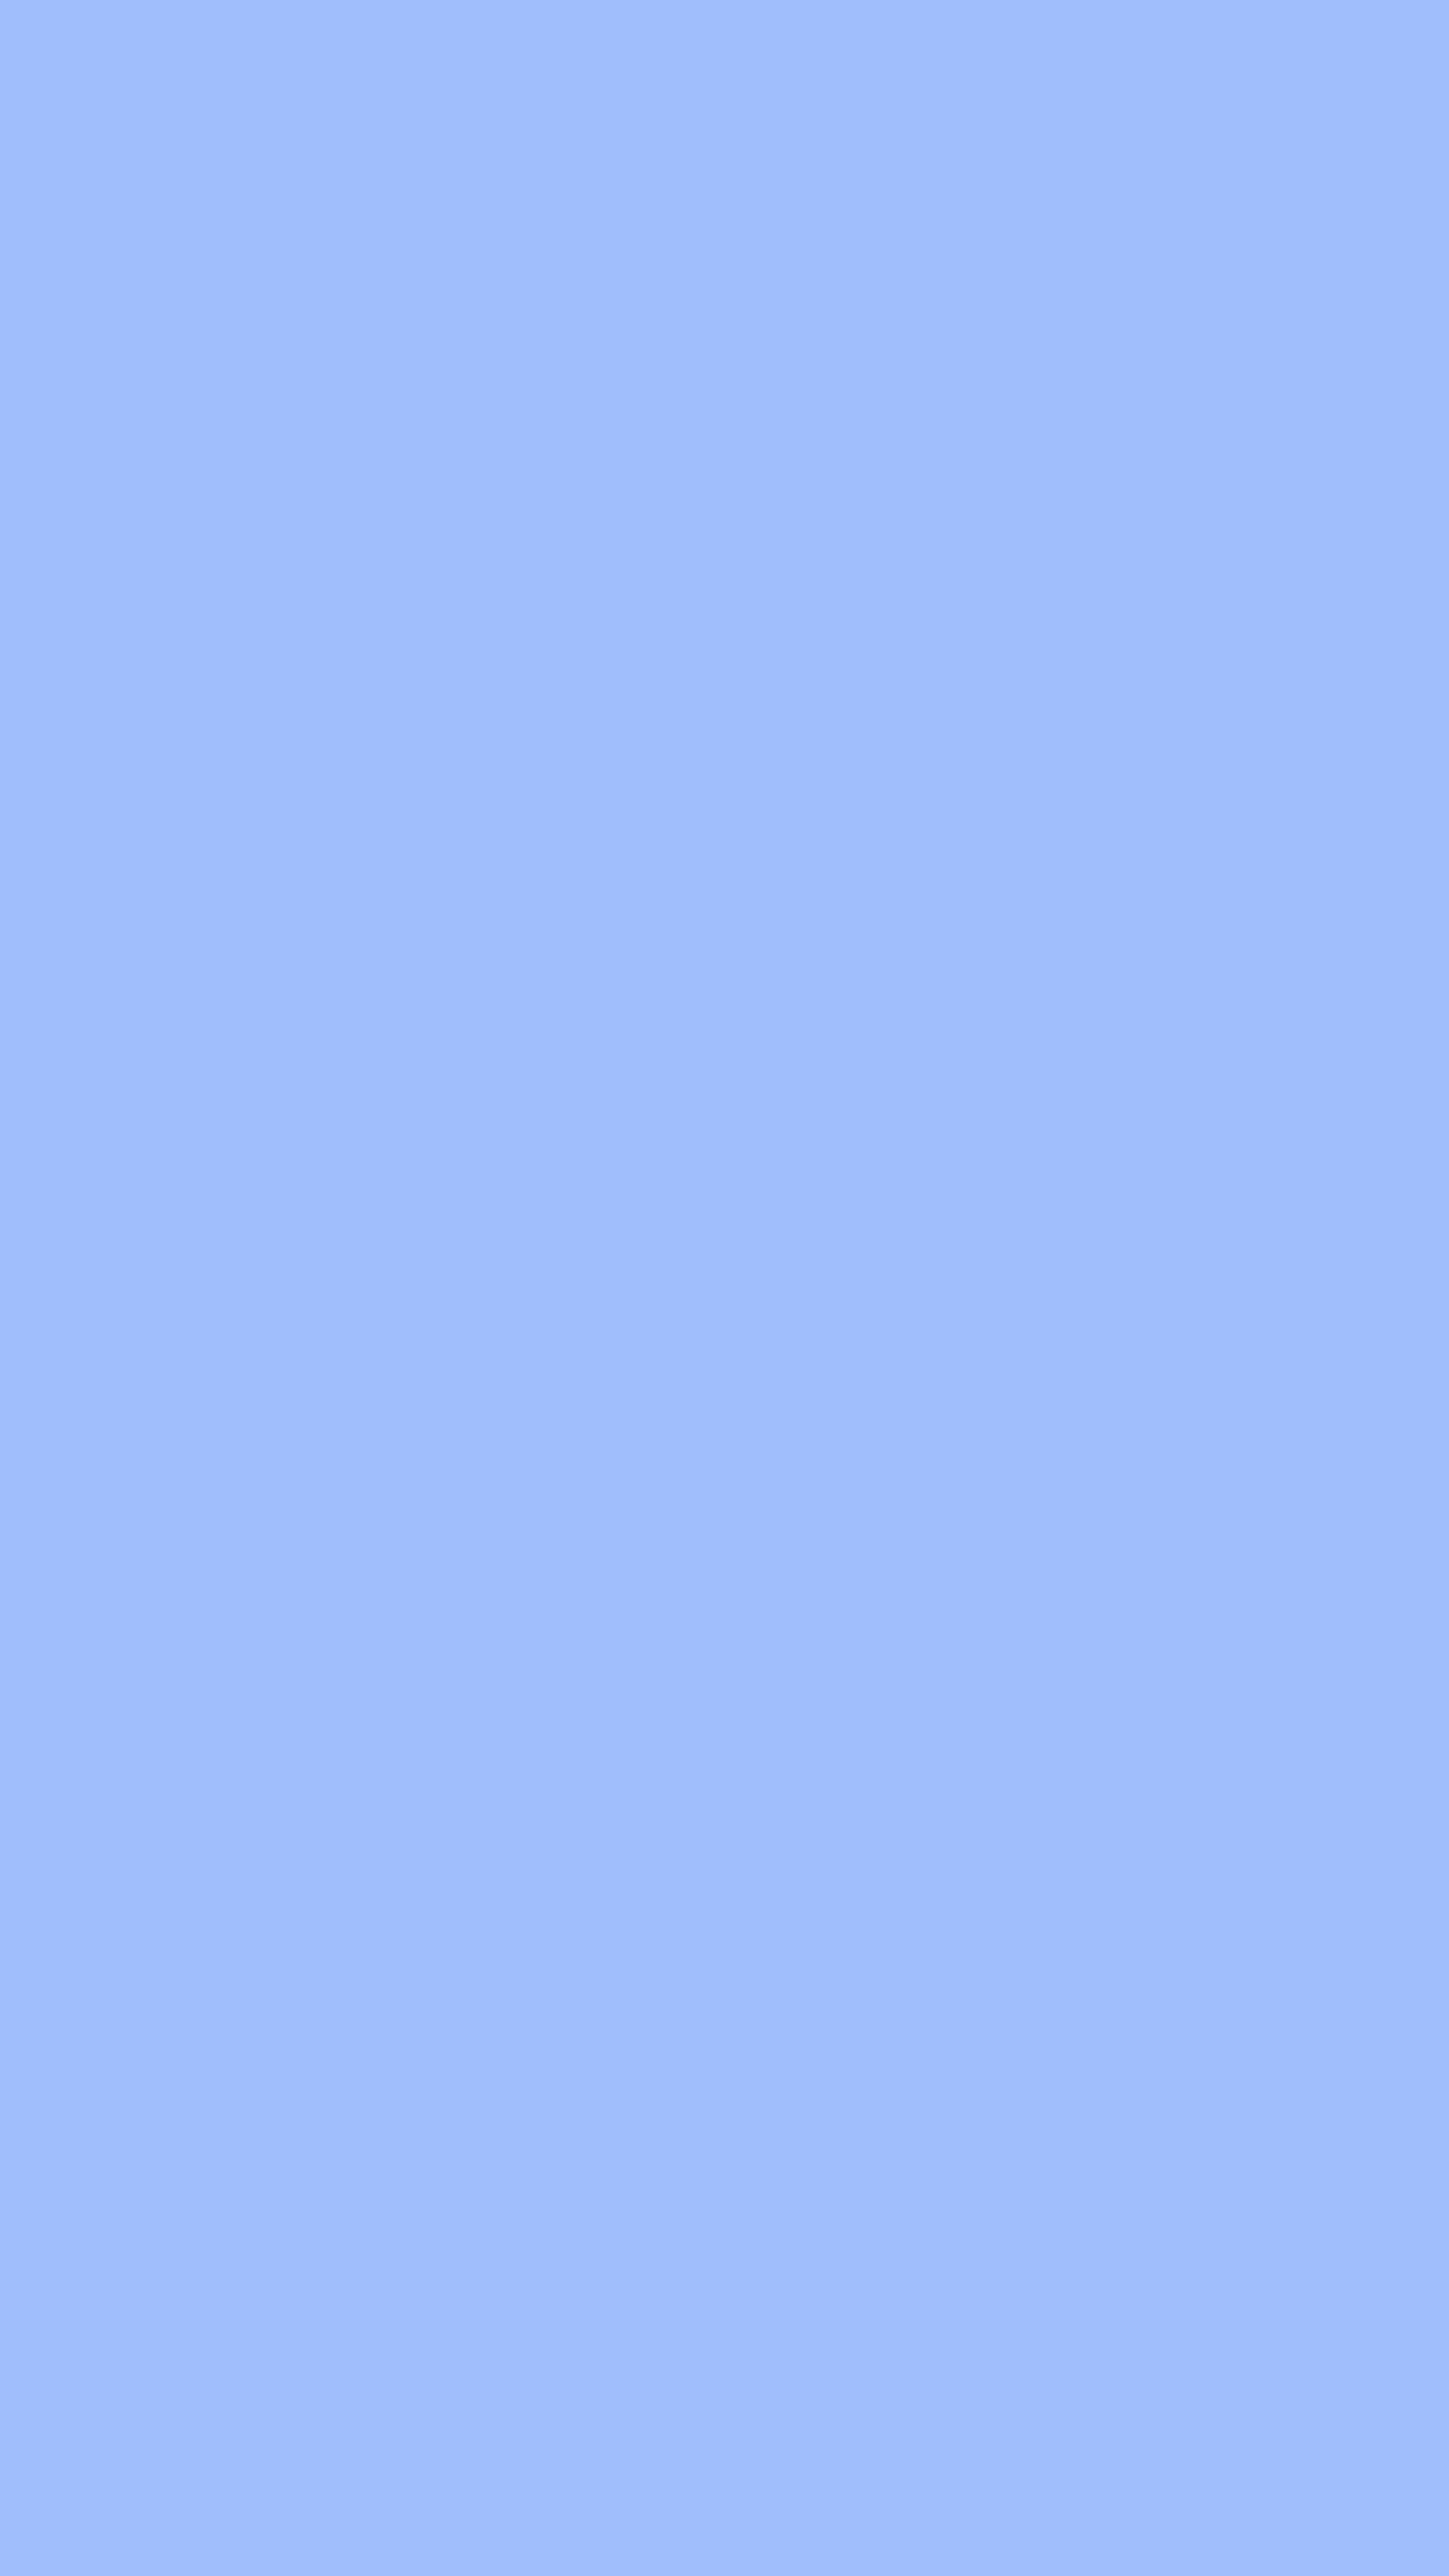 Bright Blue Sky Simple Background کاغذ دیواری[10c3cea591d2440c9e7c]